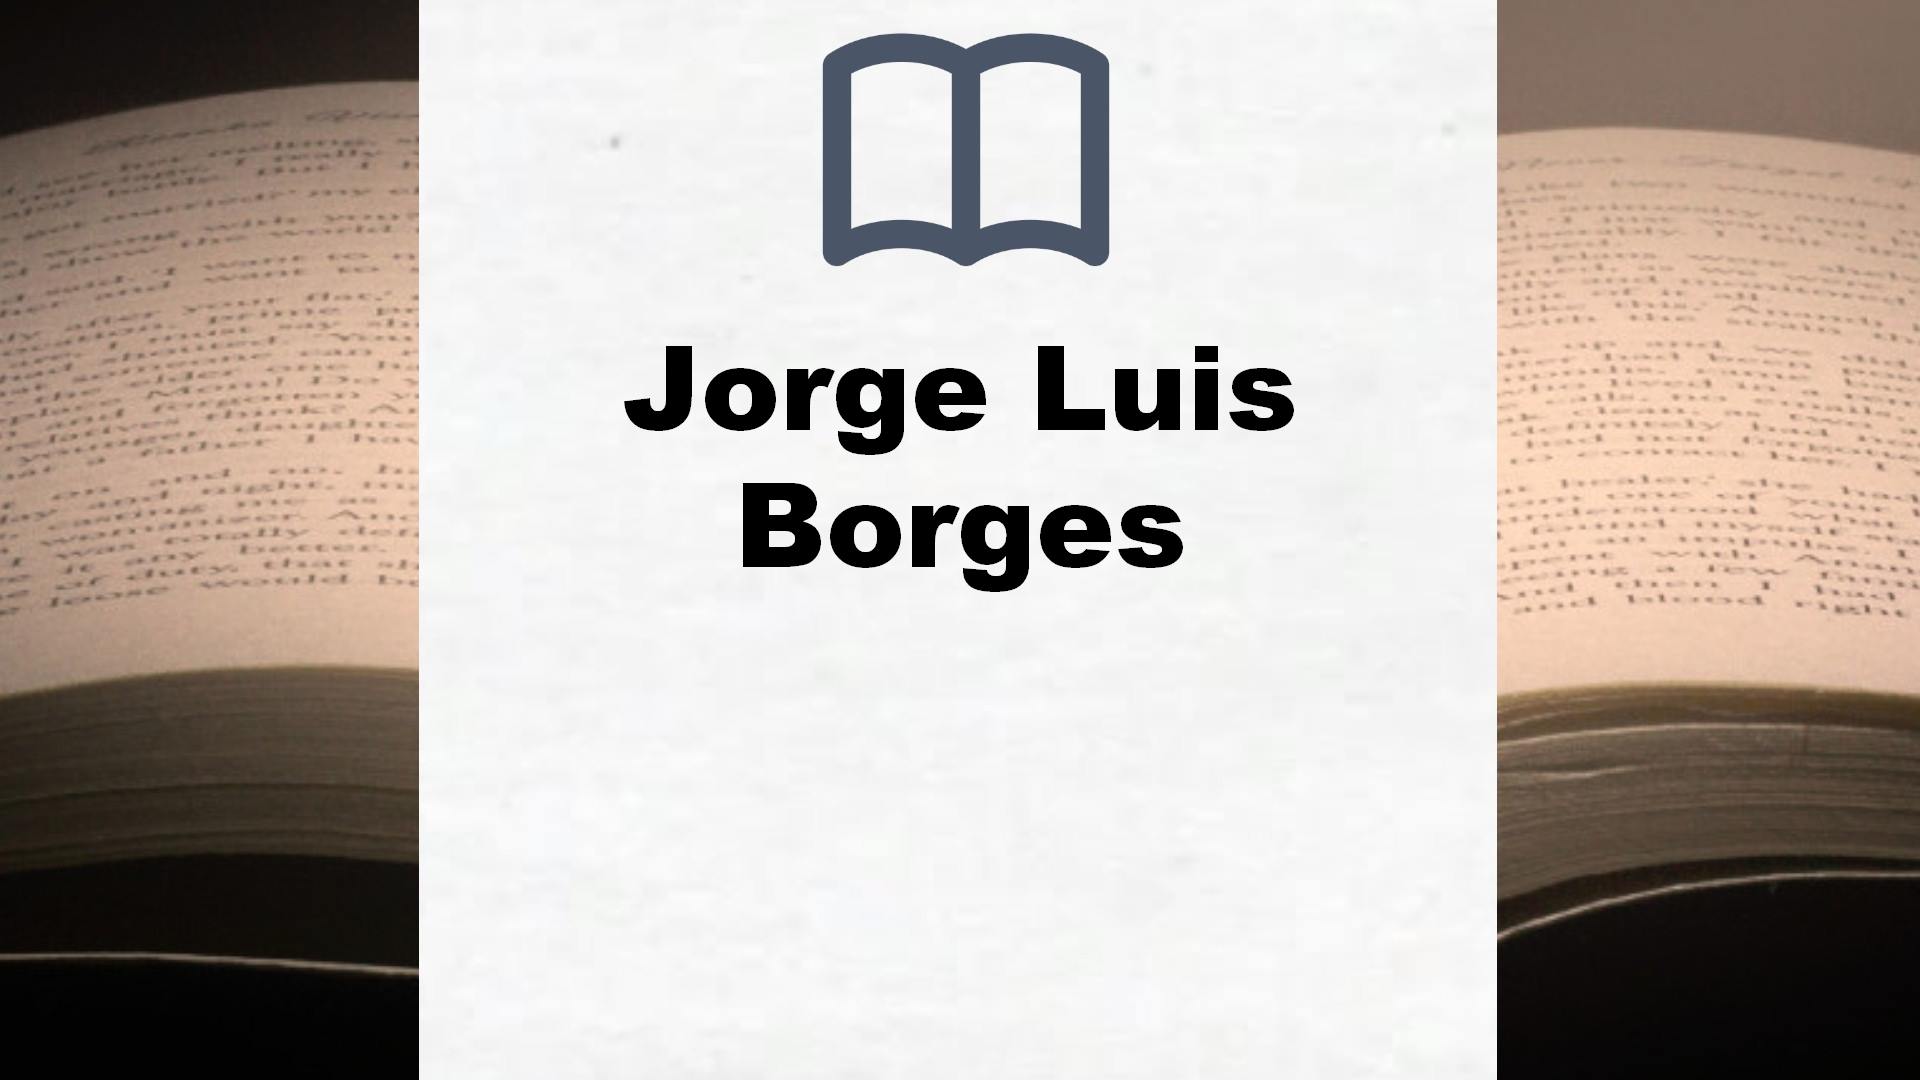 Libros Jorge Luis Borges